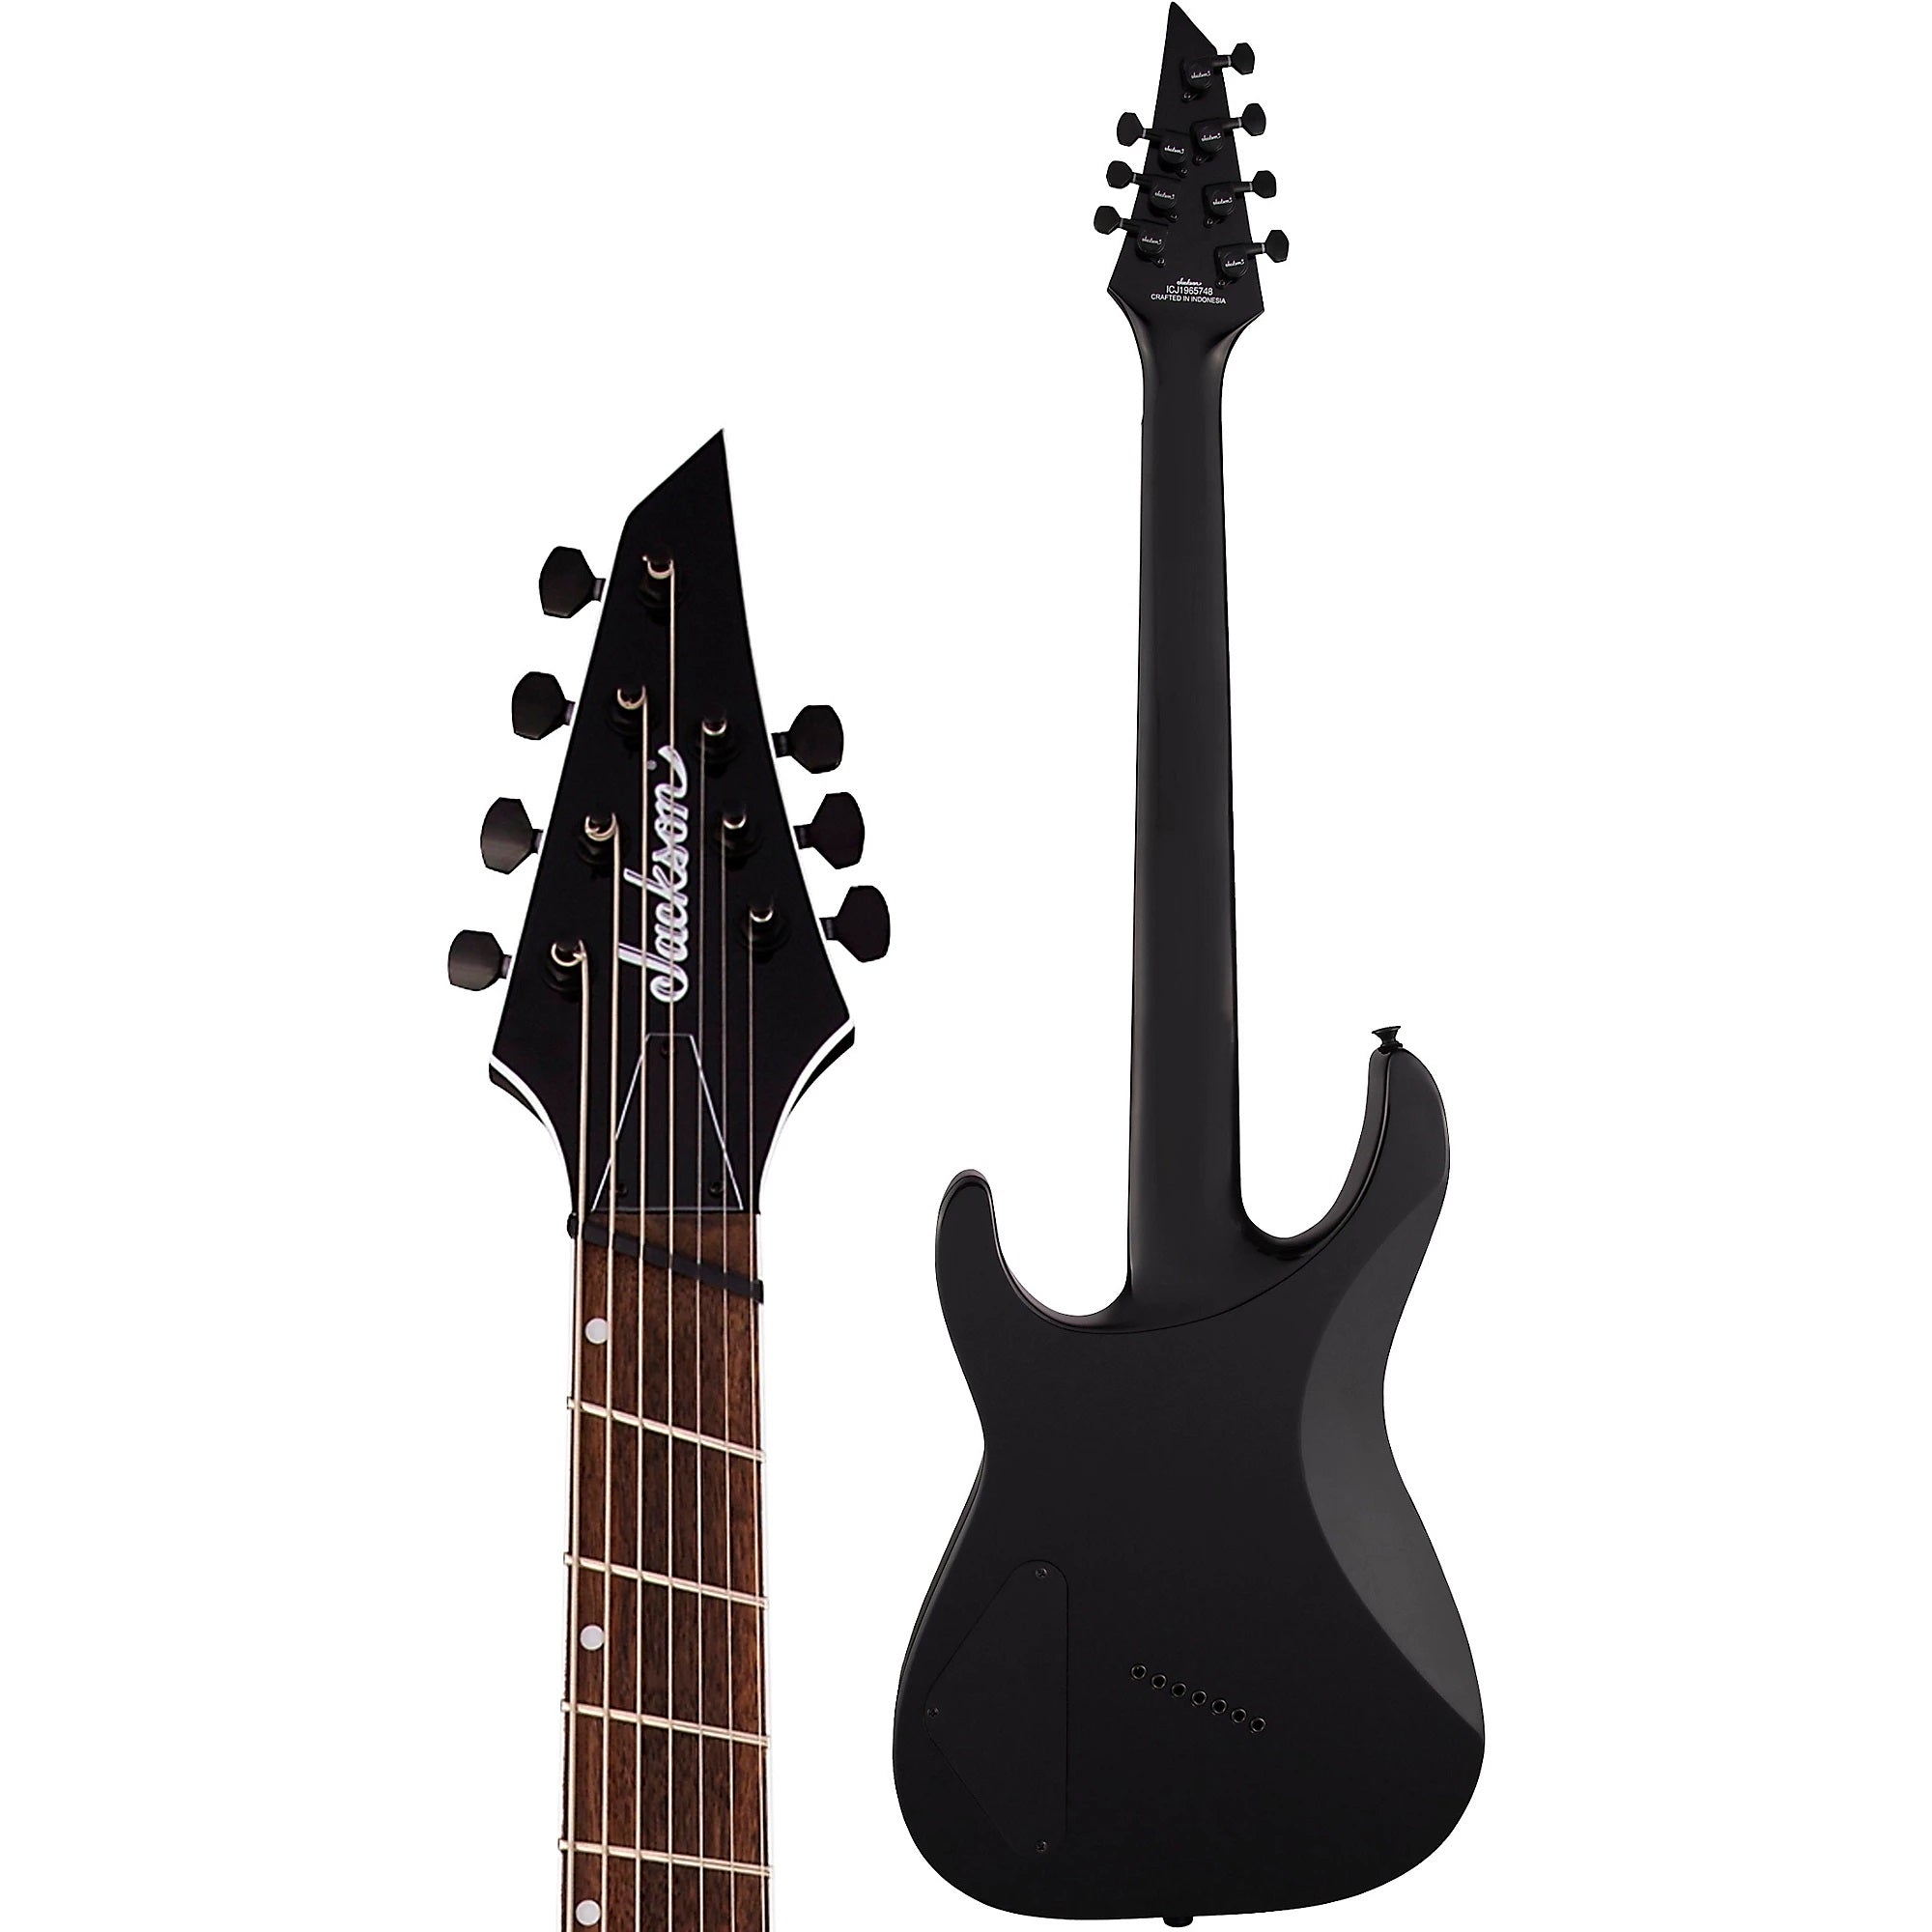 Jackson X Series Soloist Arch Top 7-String Multi-Scale Electric Guitar Transparent Blue Burst